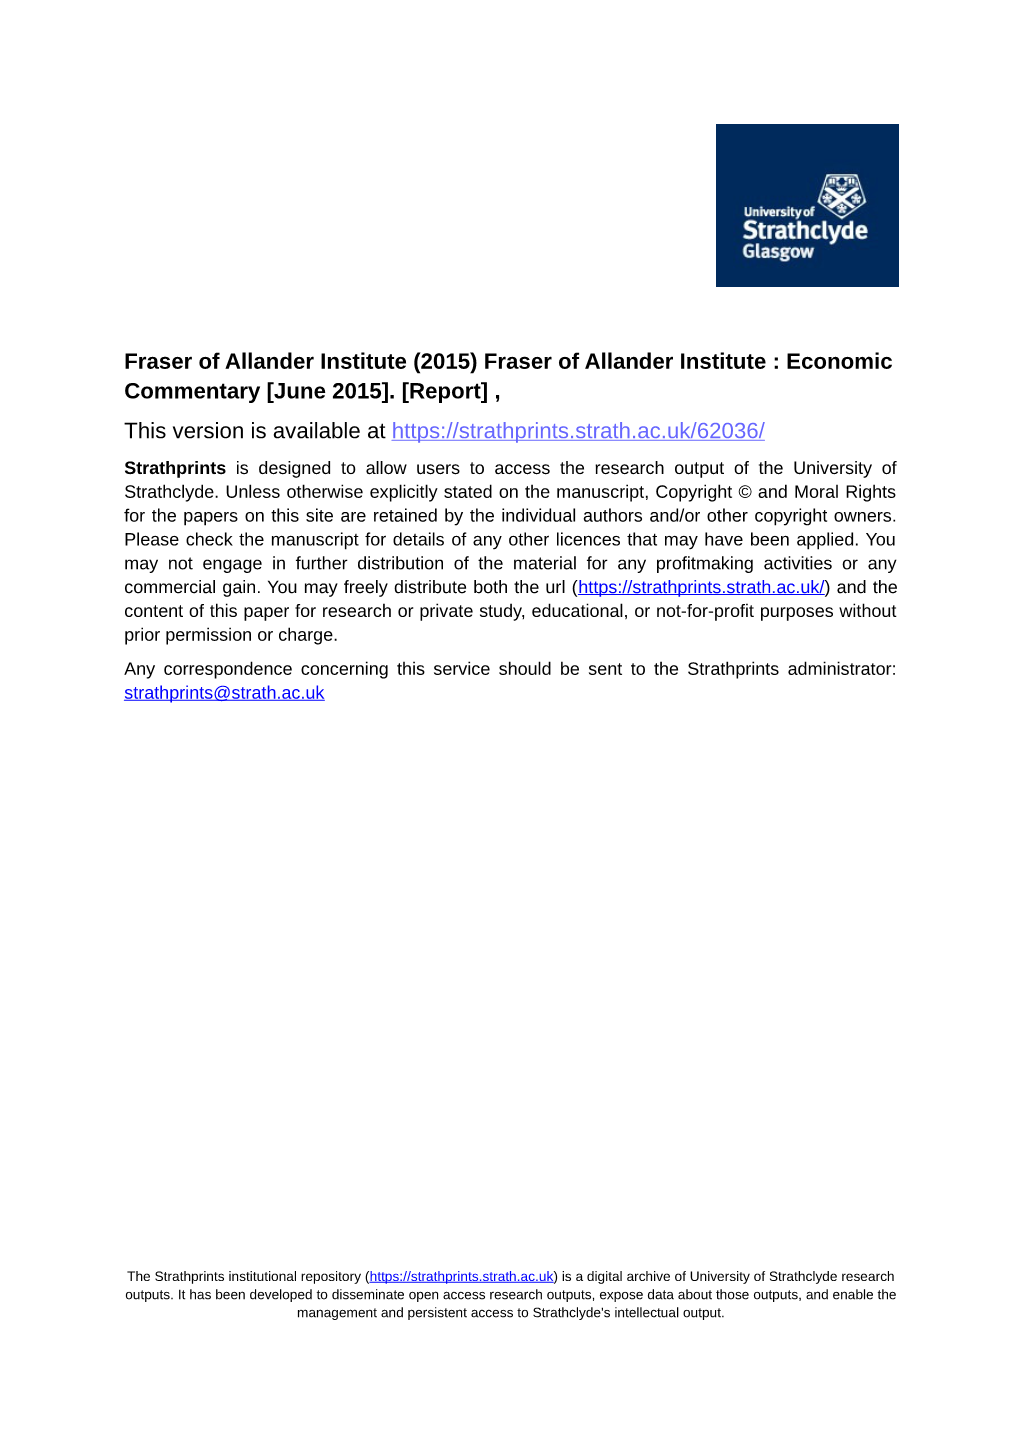 Fraser of Allander Institute (2015) Fraser of Allander Institute : Economic Commentary [June 2015]